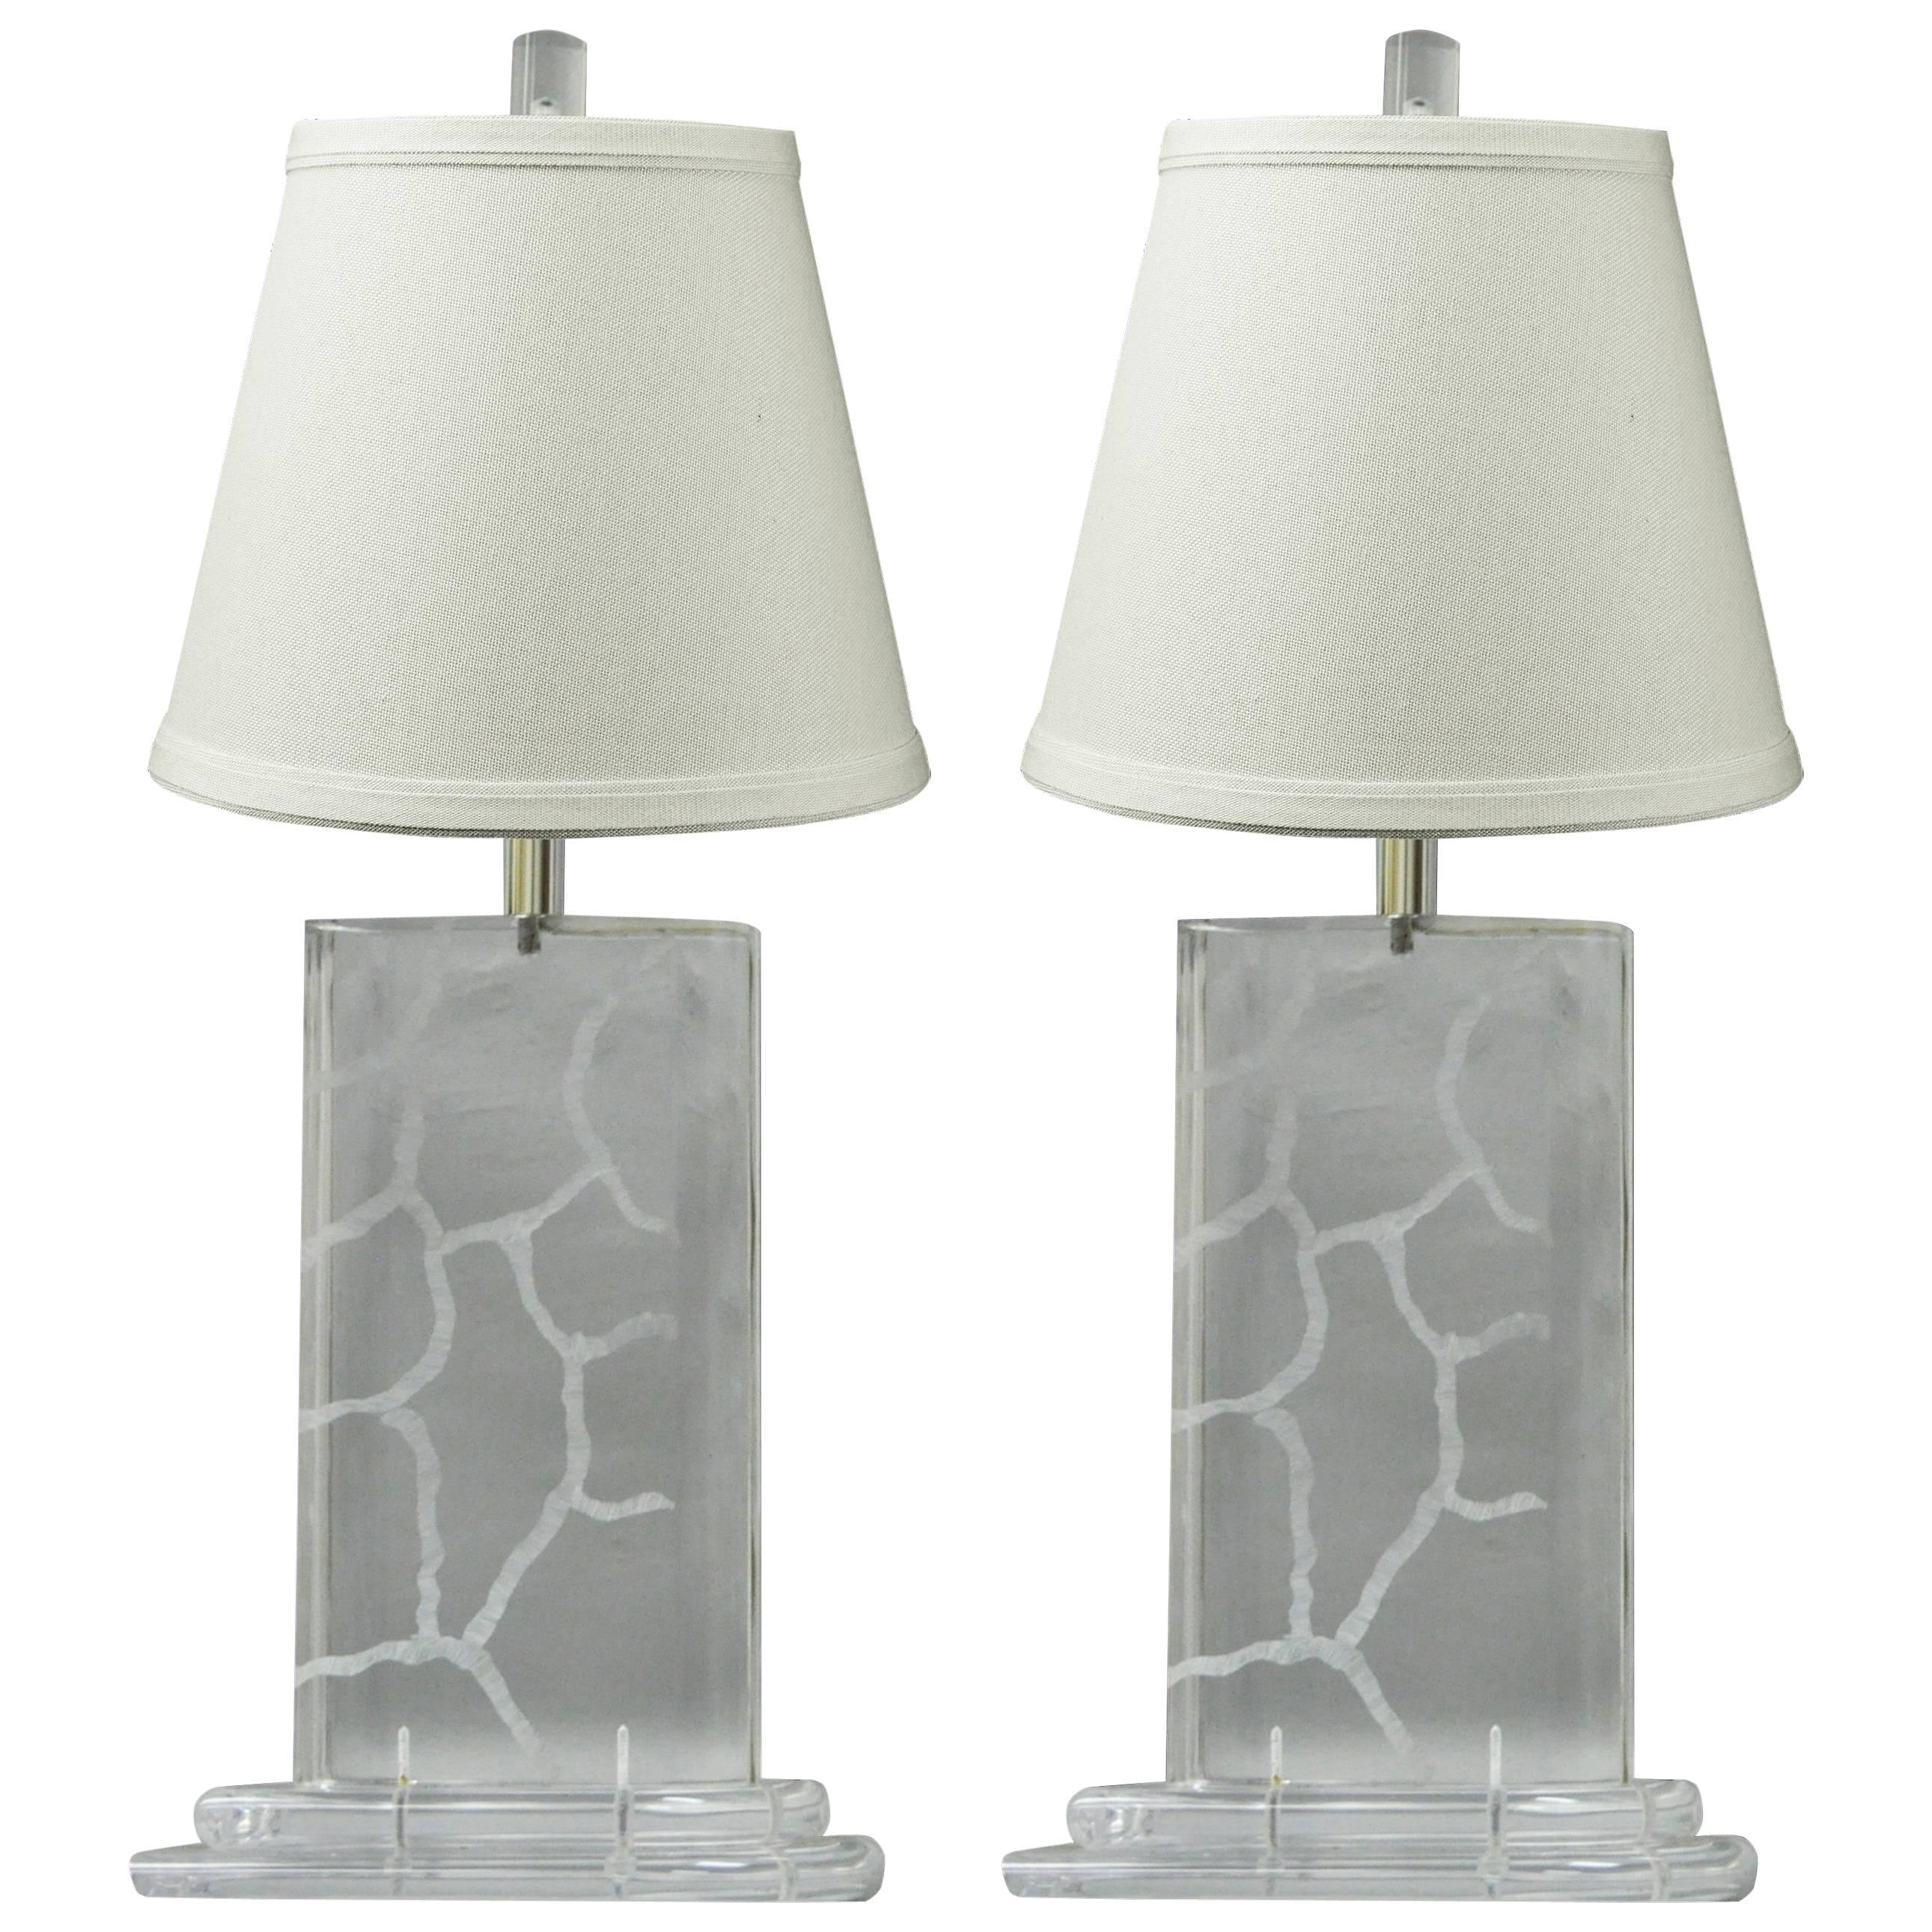 Pair of Van Teal Clear Lucite Sculptural Mid-Century Modern Vintage Table Lamps